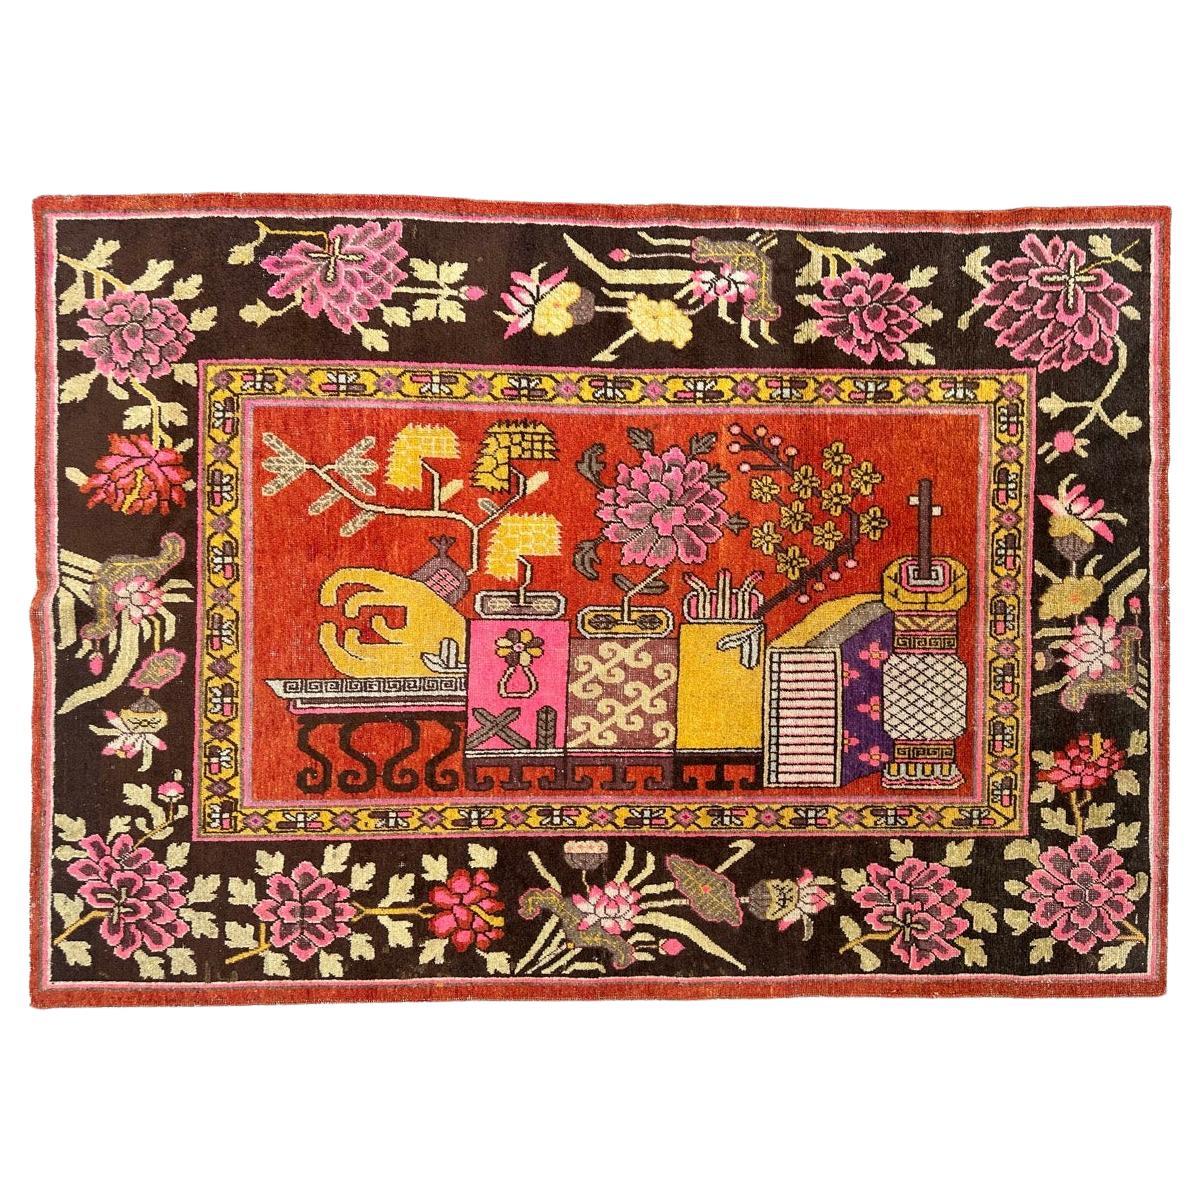 Bobyrug’s Nice antique Chinese Khotan rug 